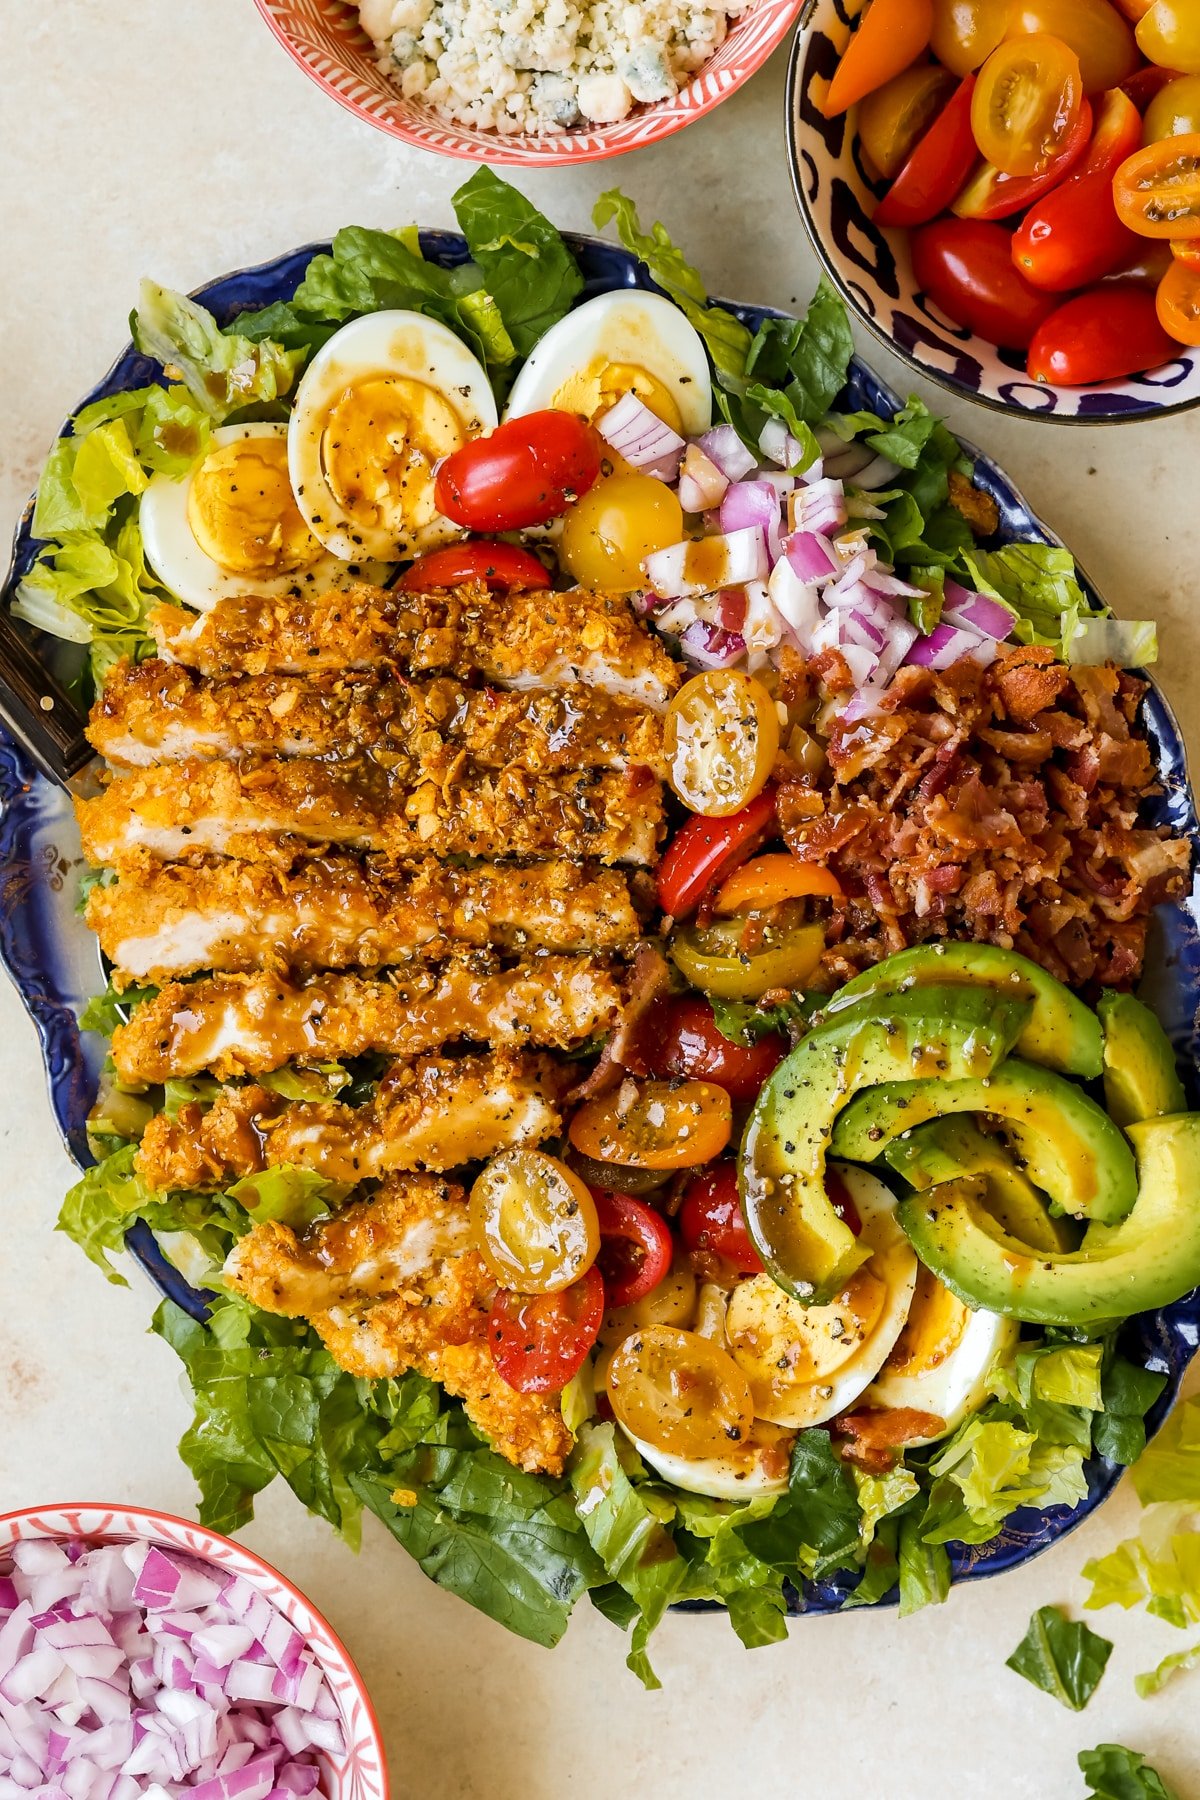 Cobb Salad Wraps Recipe: How to Make It